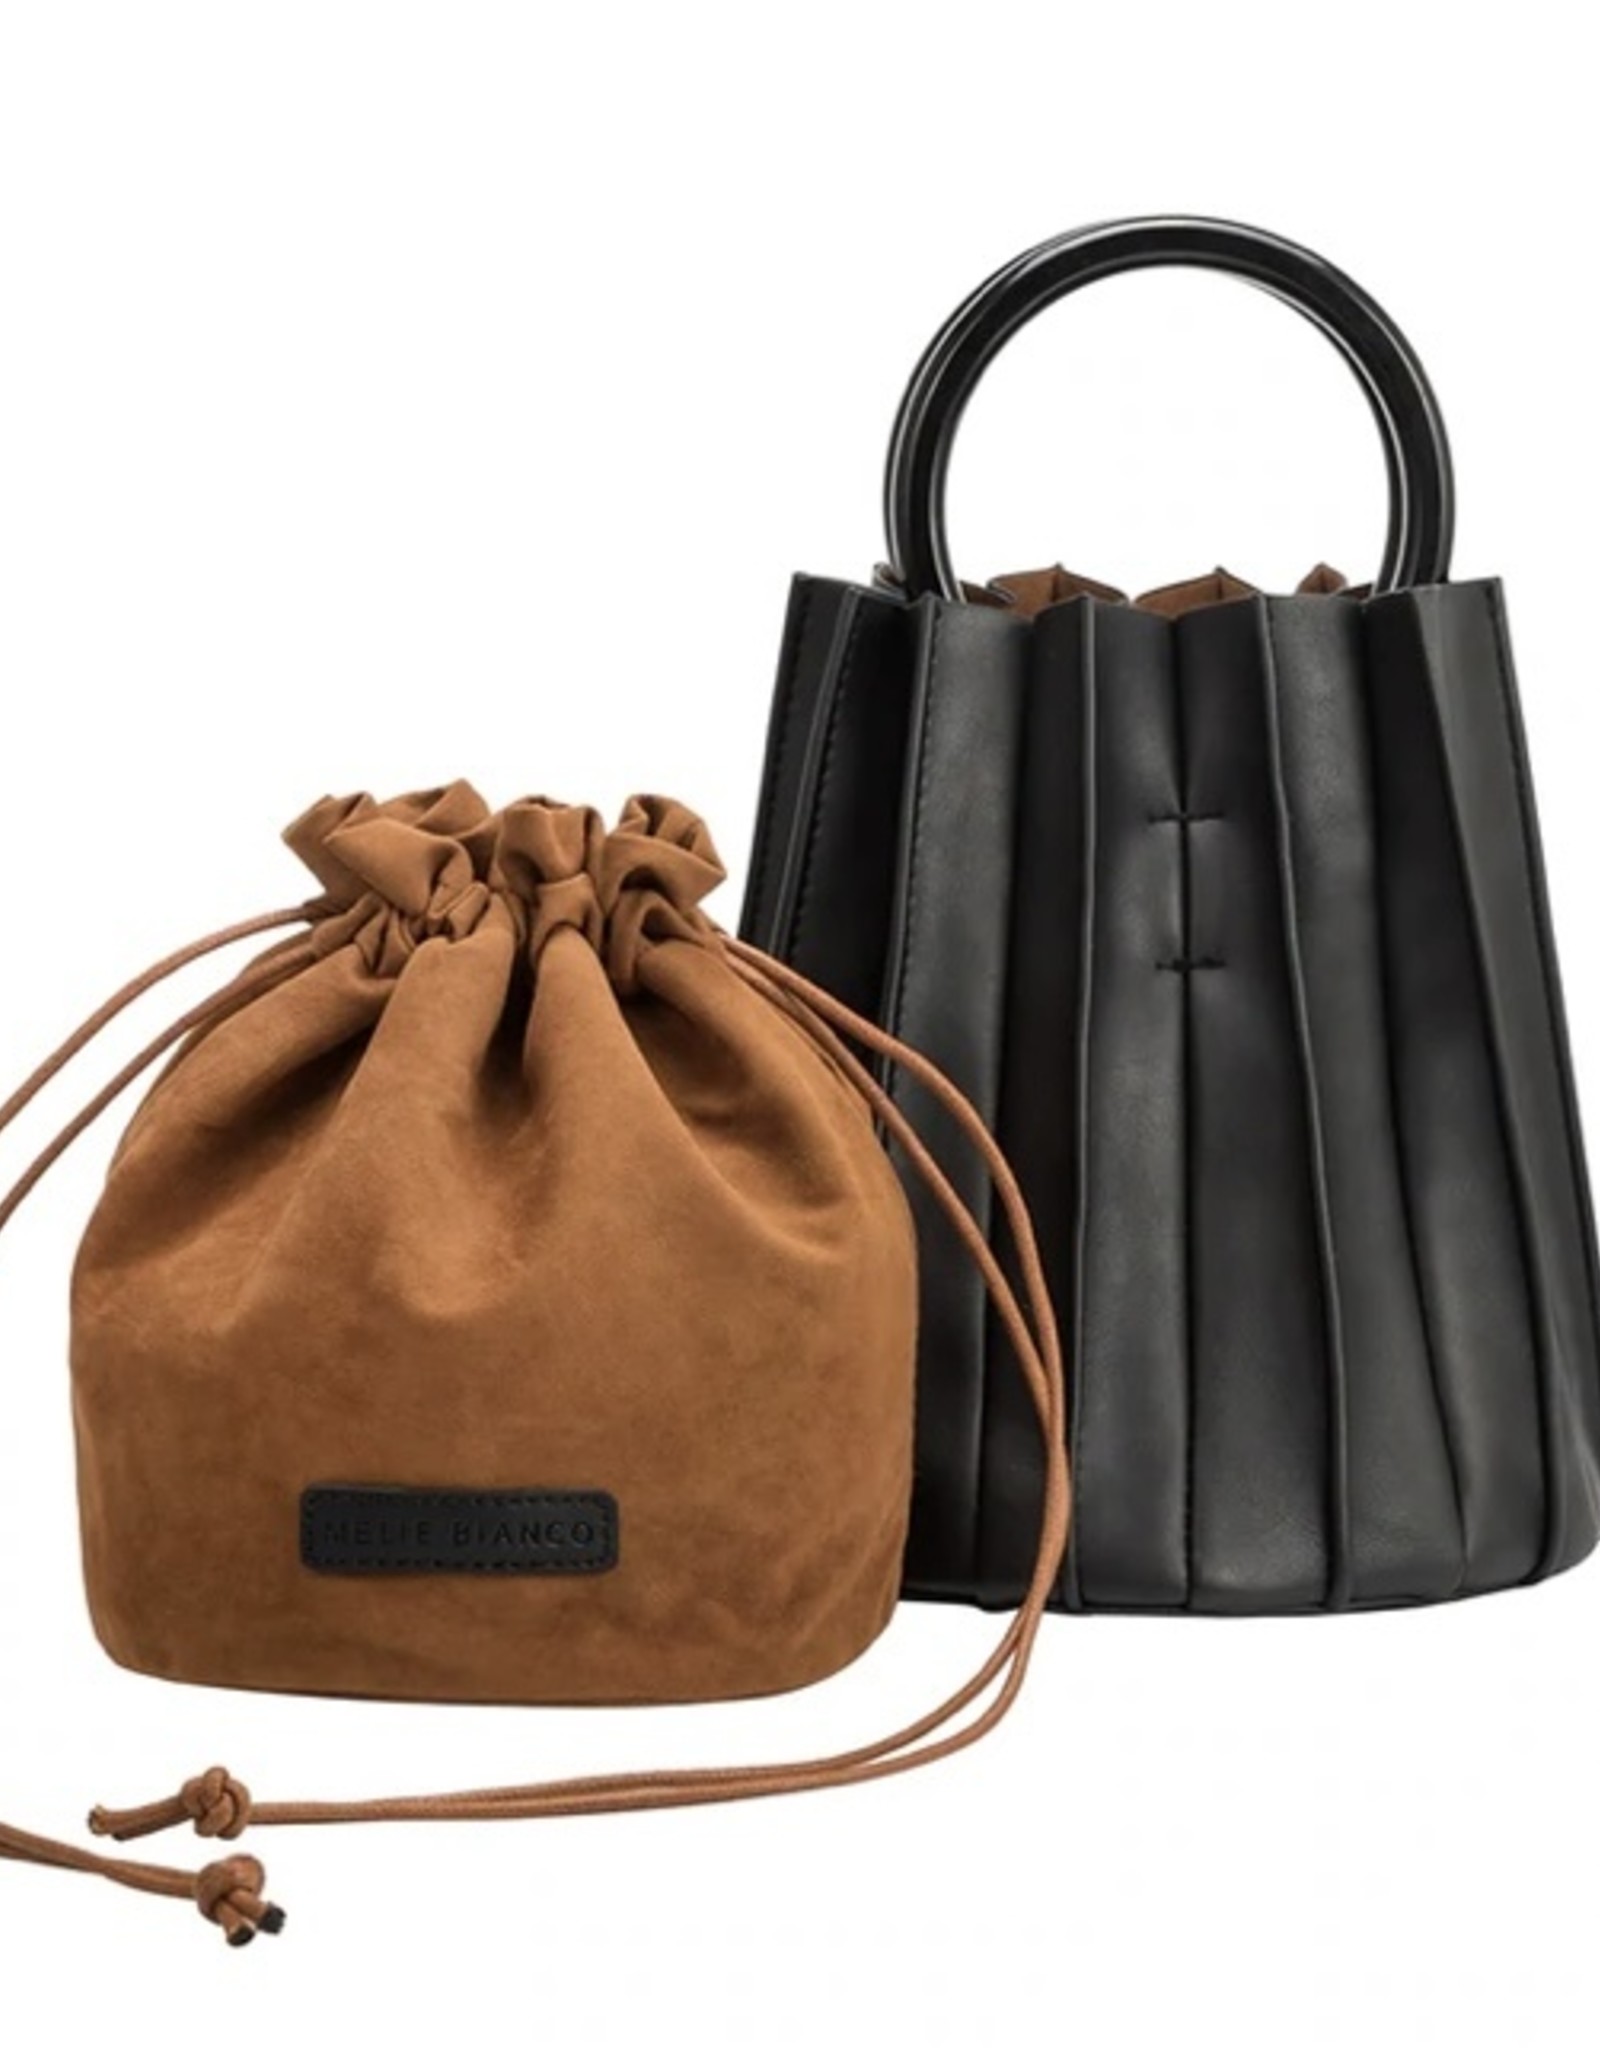 Melie Bianco Black Lily Top Handle Bag